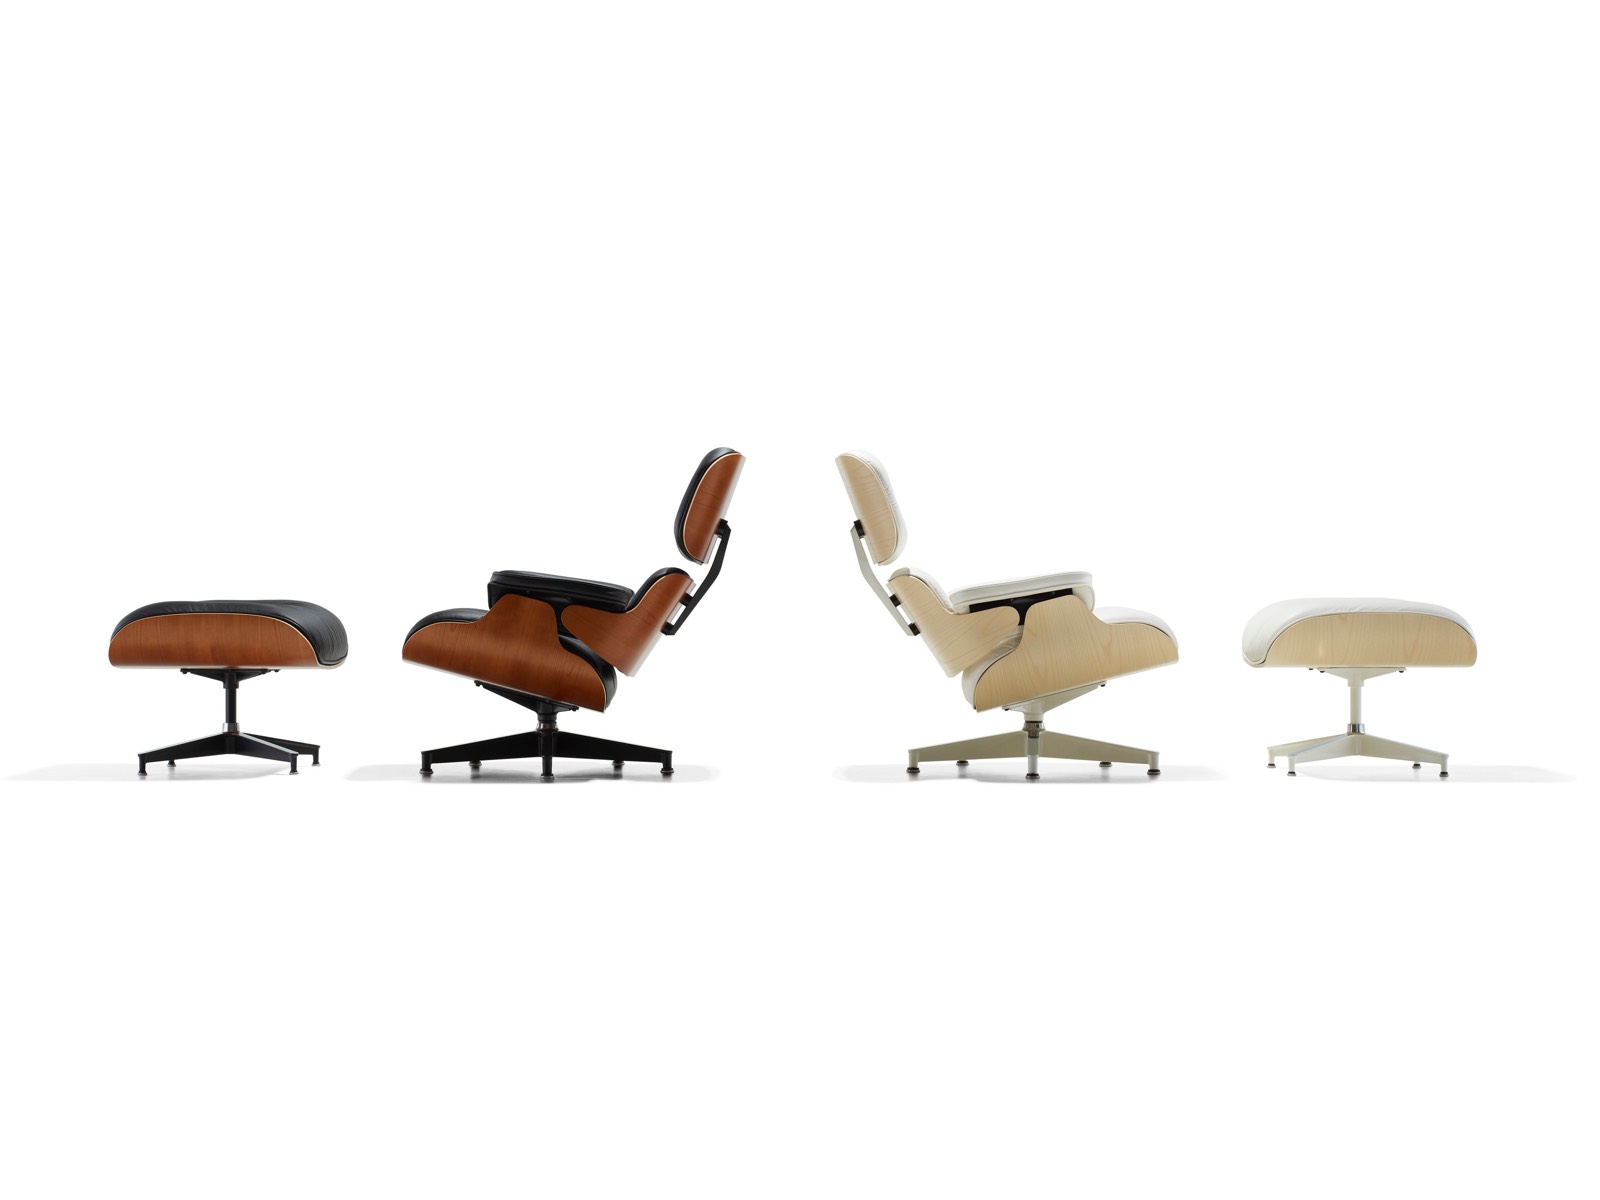 Eames休闲椅和奥斯曼黑色皮革和Eames休闲椅和奥斯曼白色皮革，背靠背。